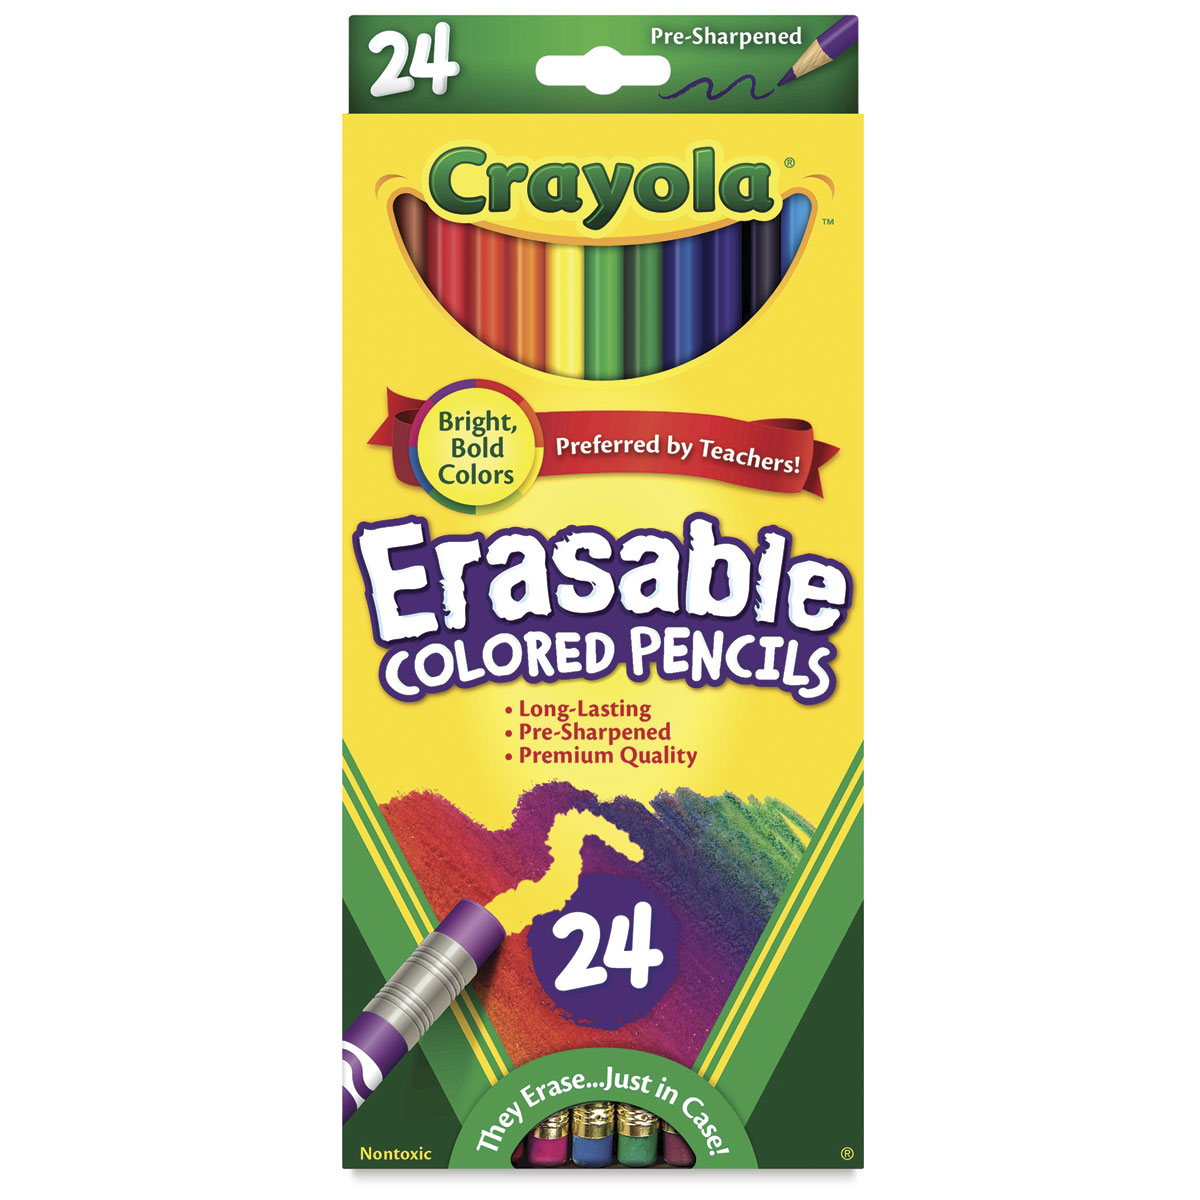 Crayola Erasable Colored Pencils - Assorted Colors, Set of 24